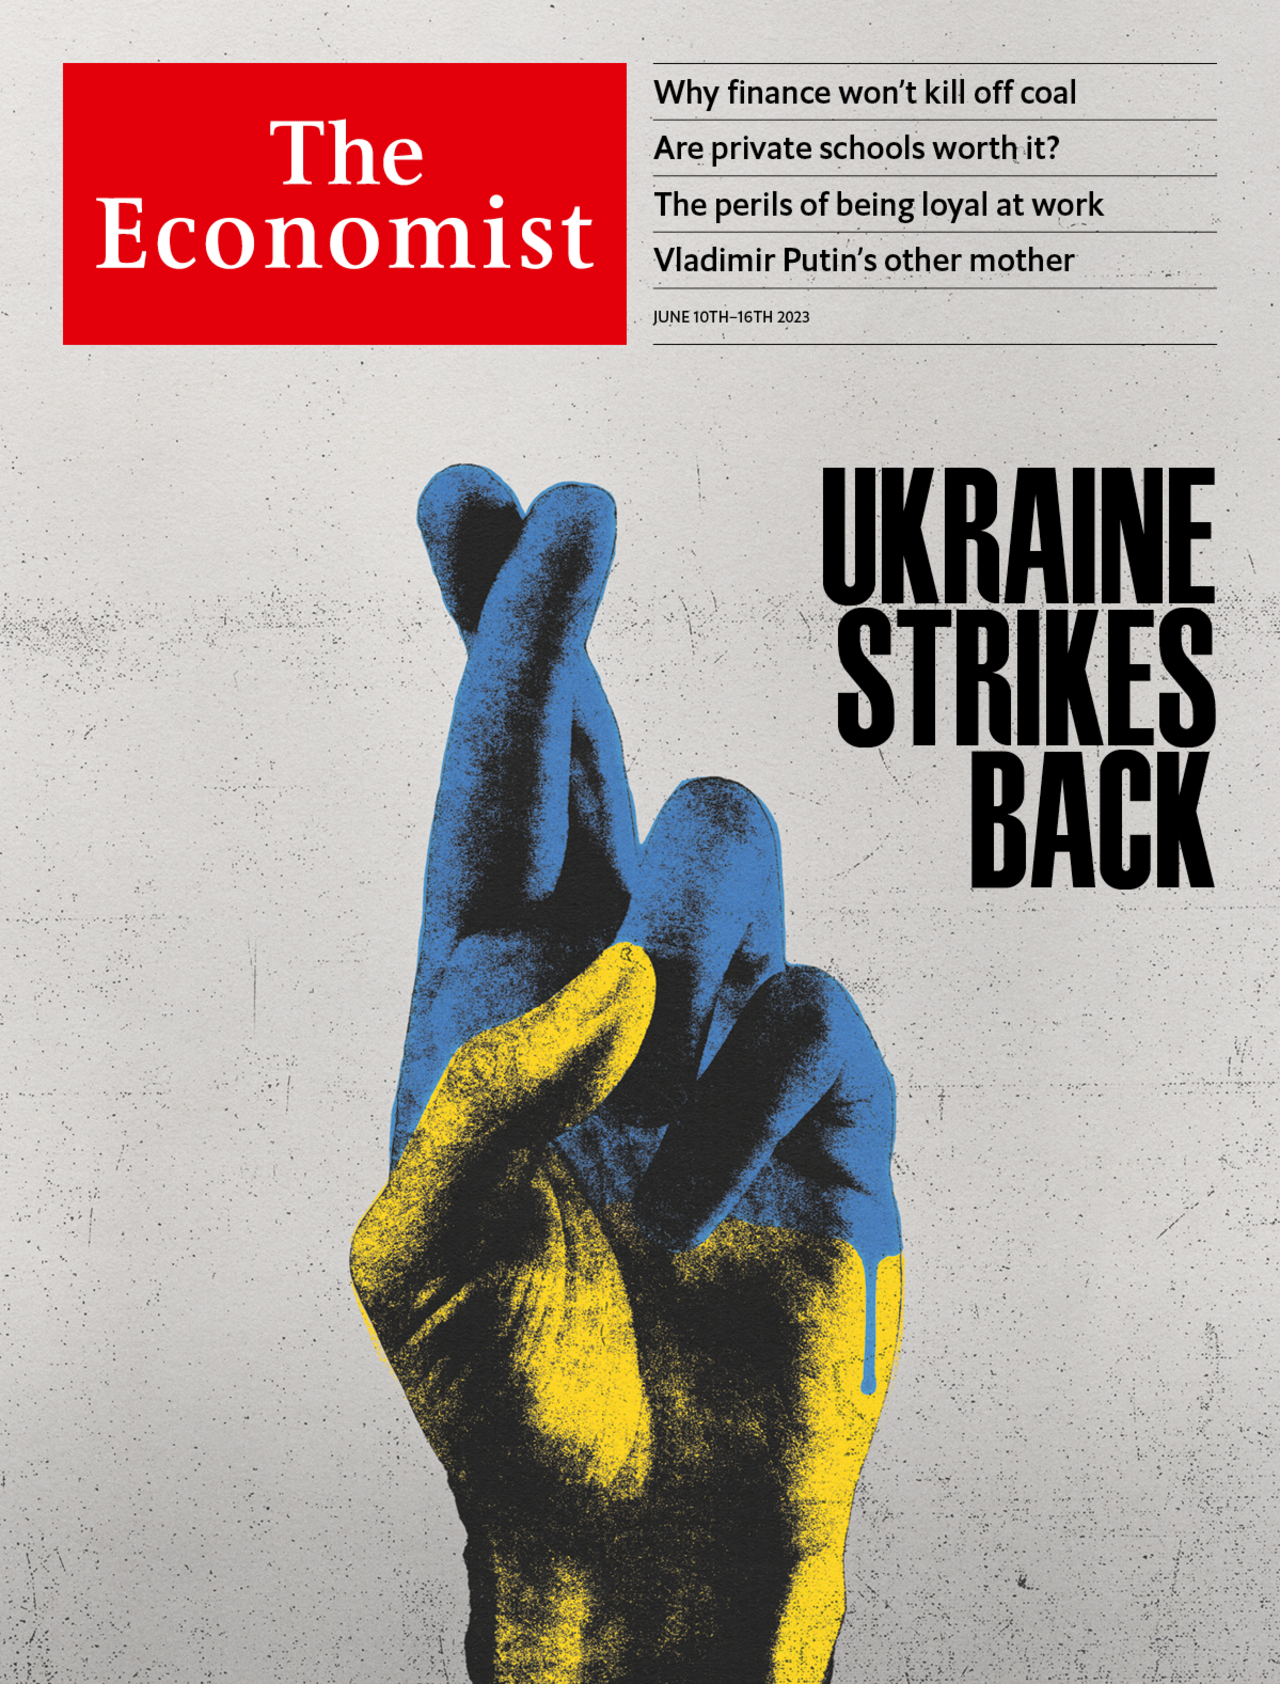 Ukraine strikes back